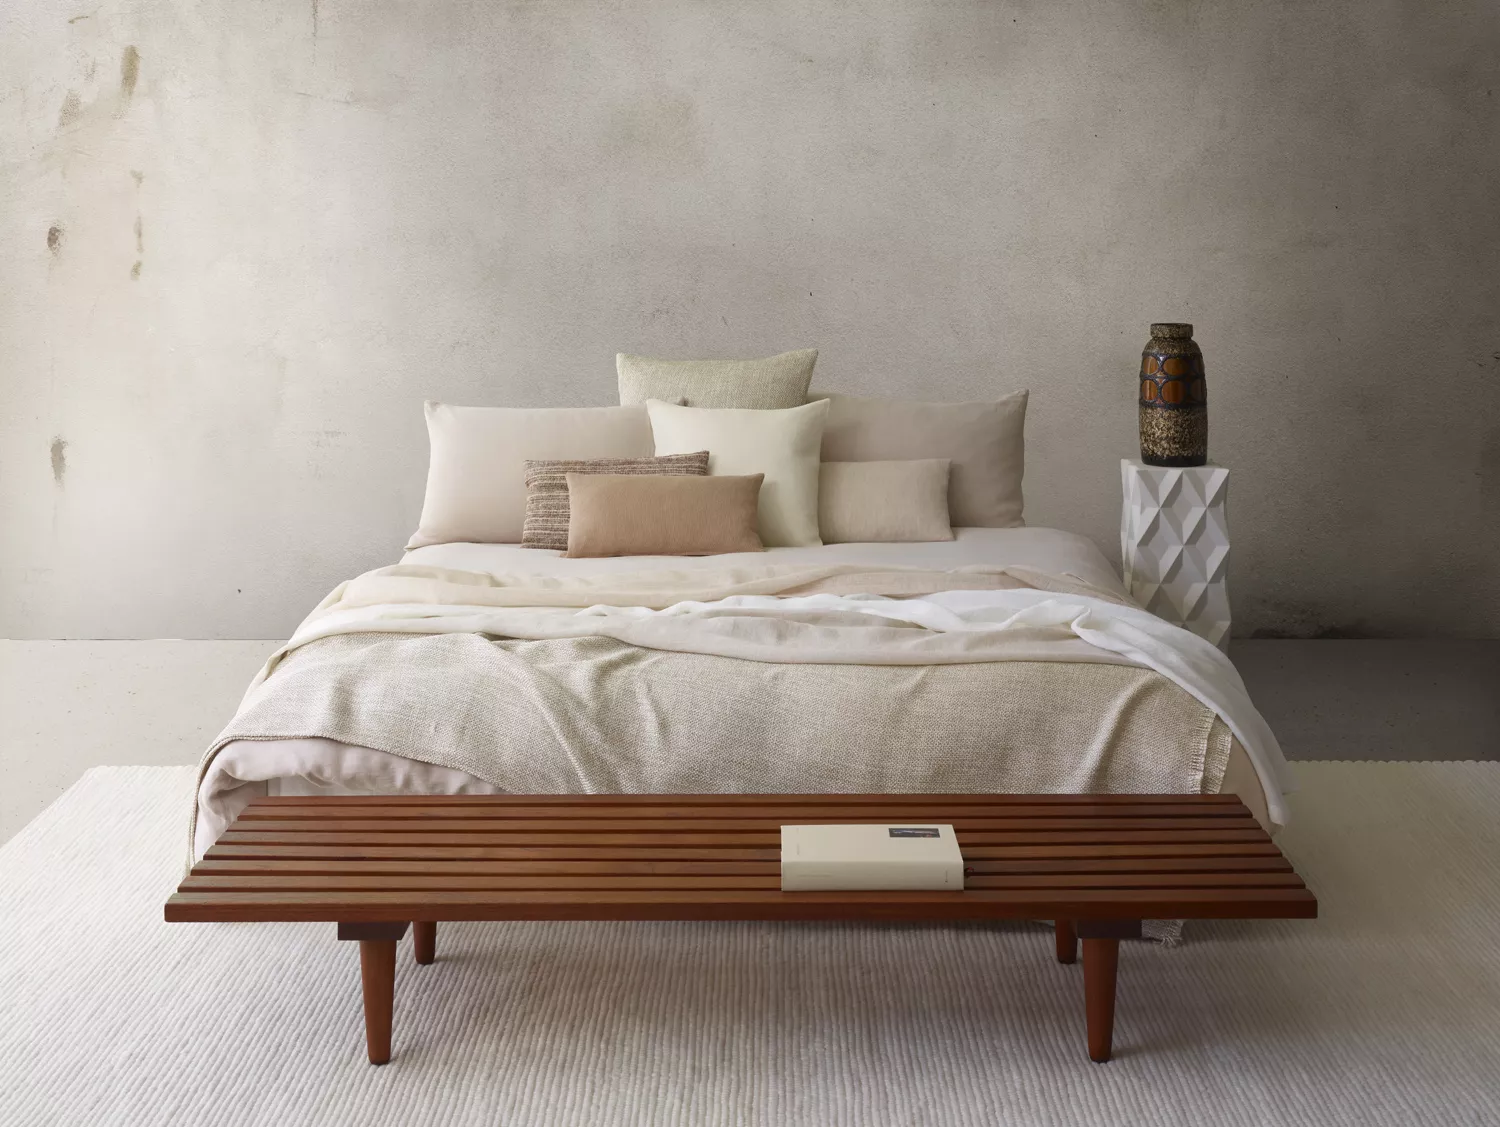 Pure & Present bed linen